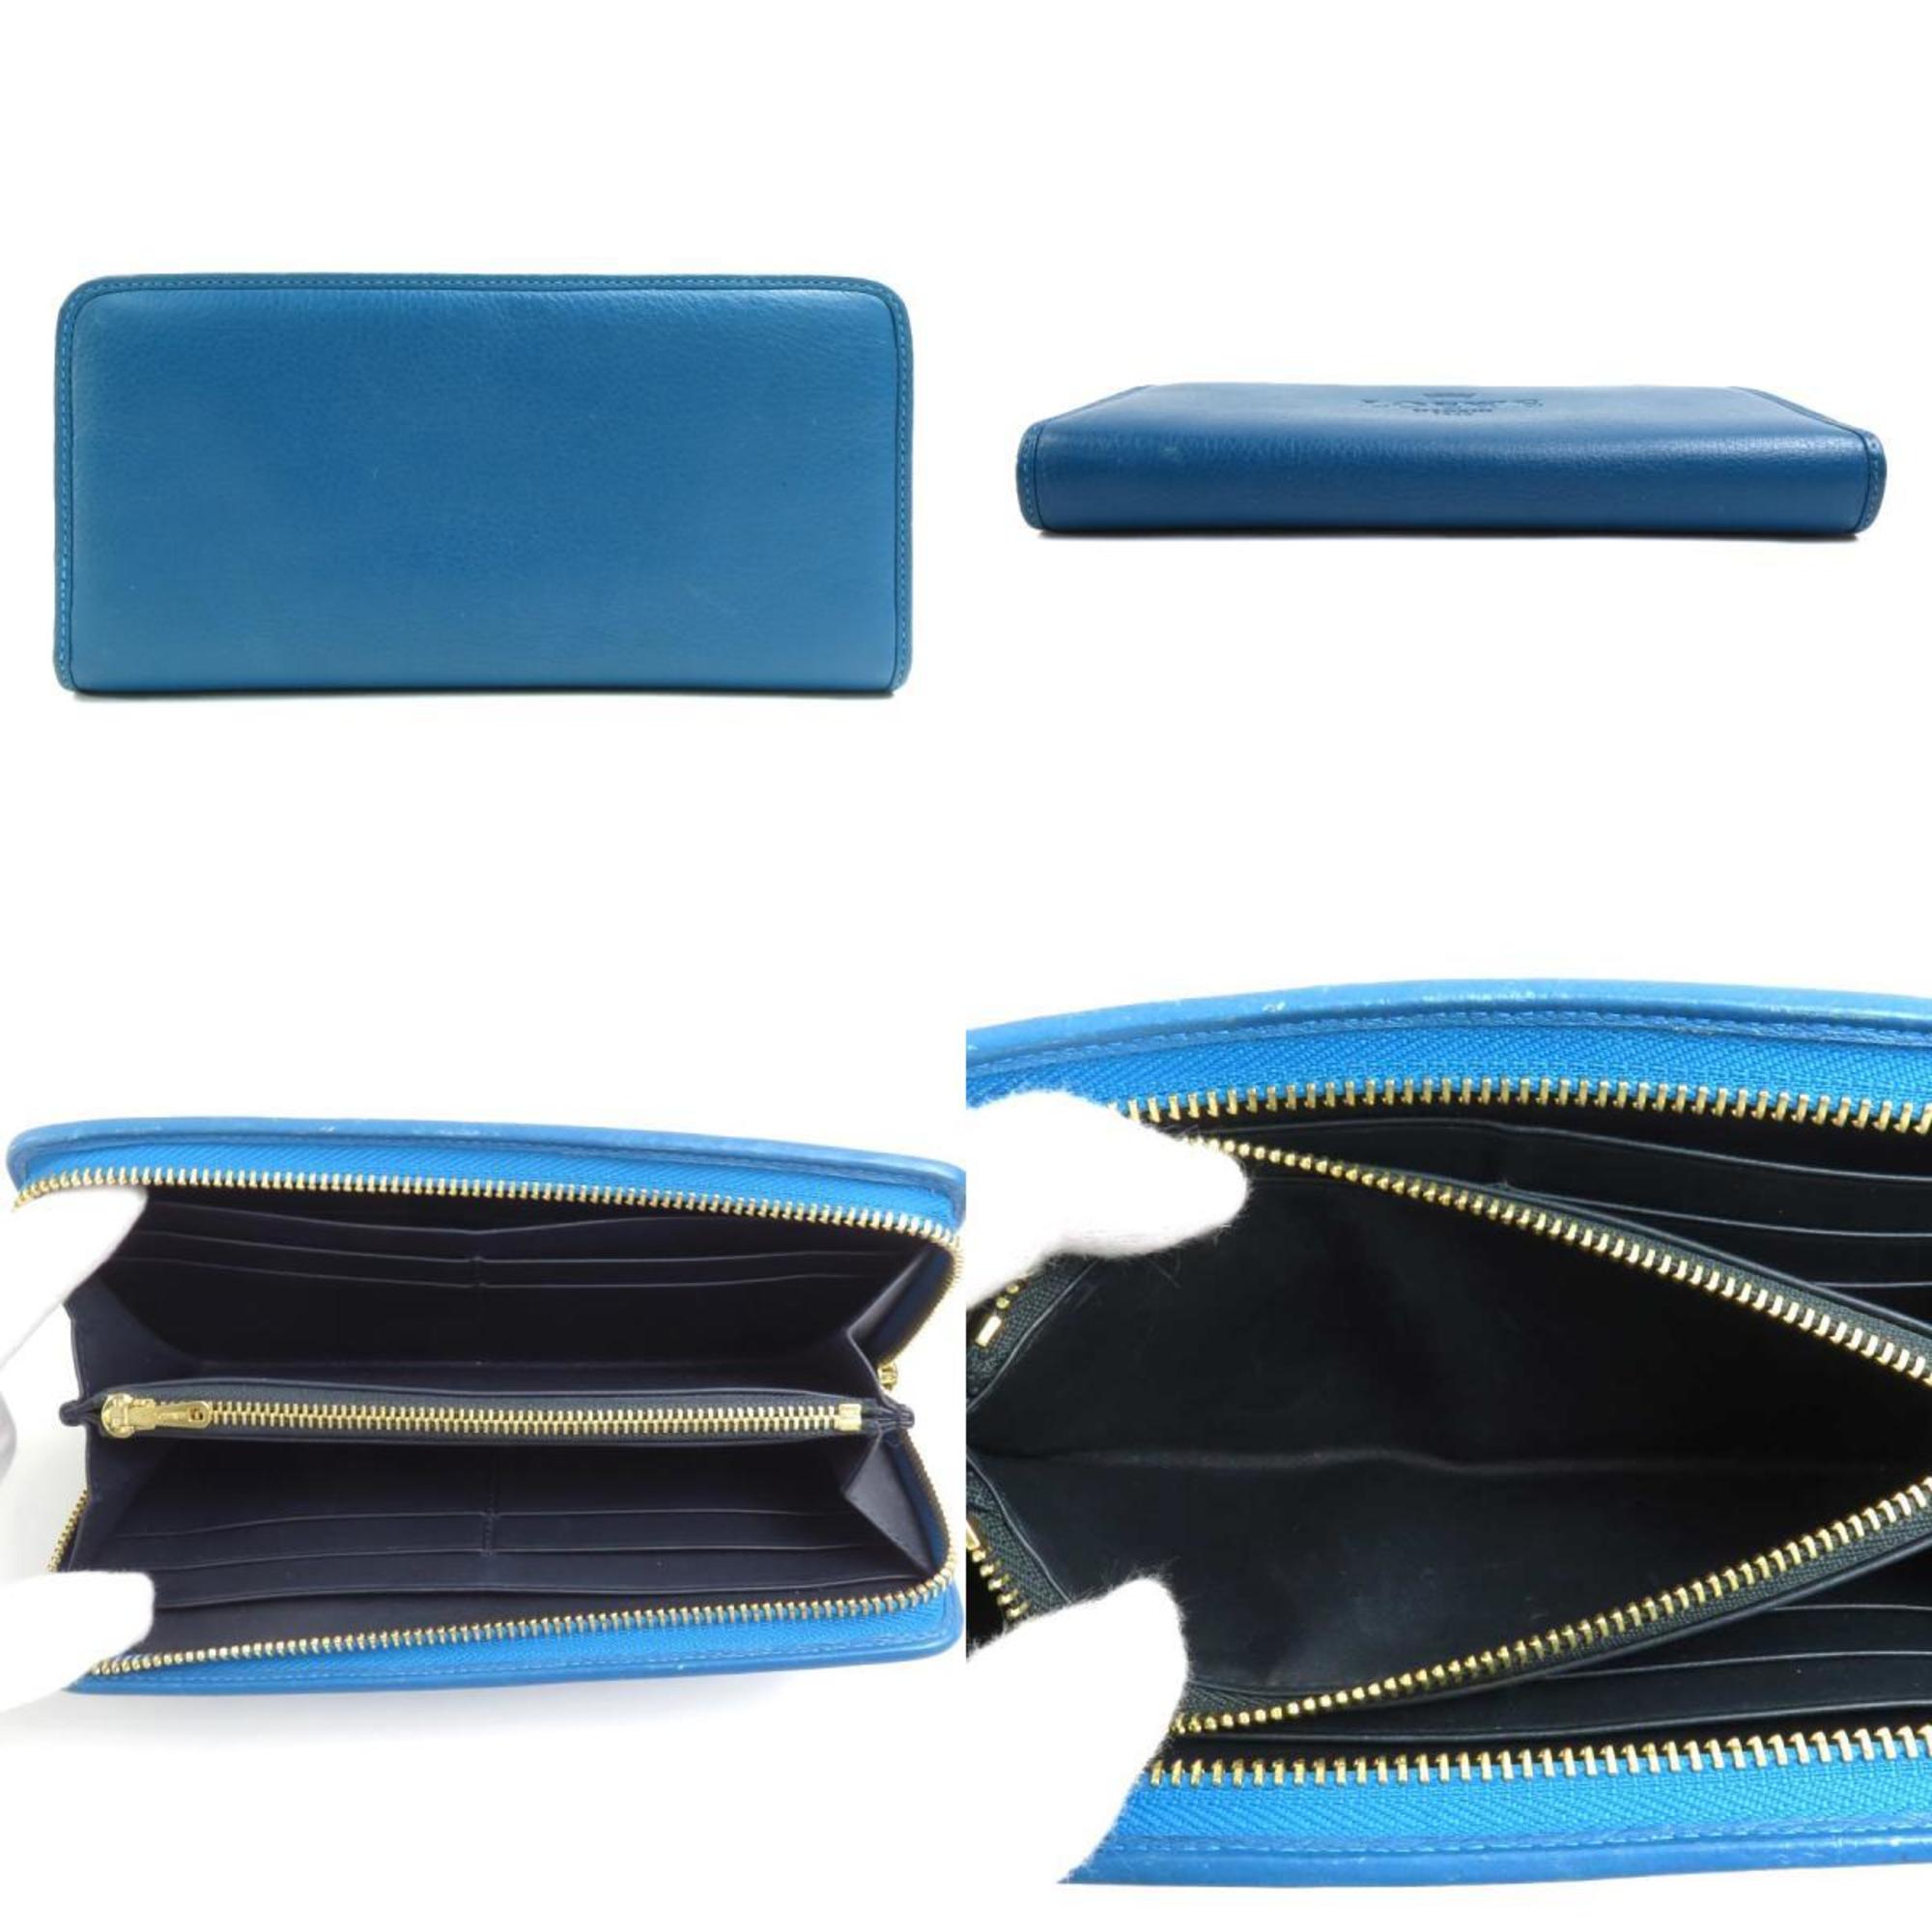 LOEWE Round zipper long wallet leather blue gold unisex